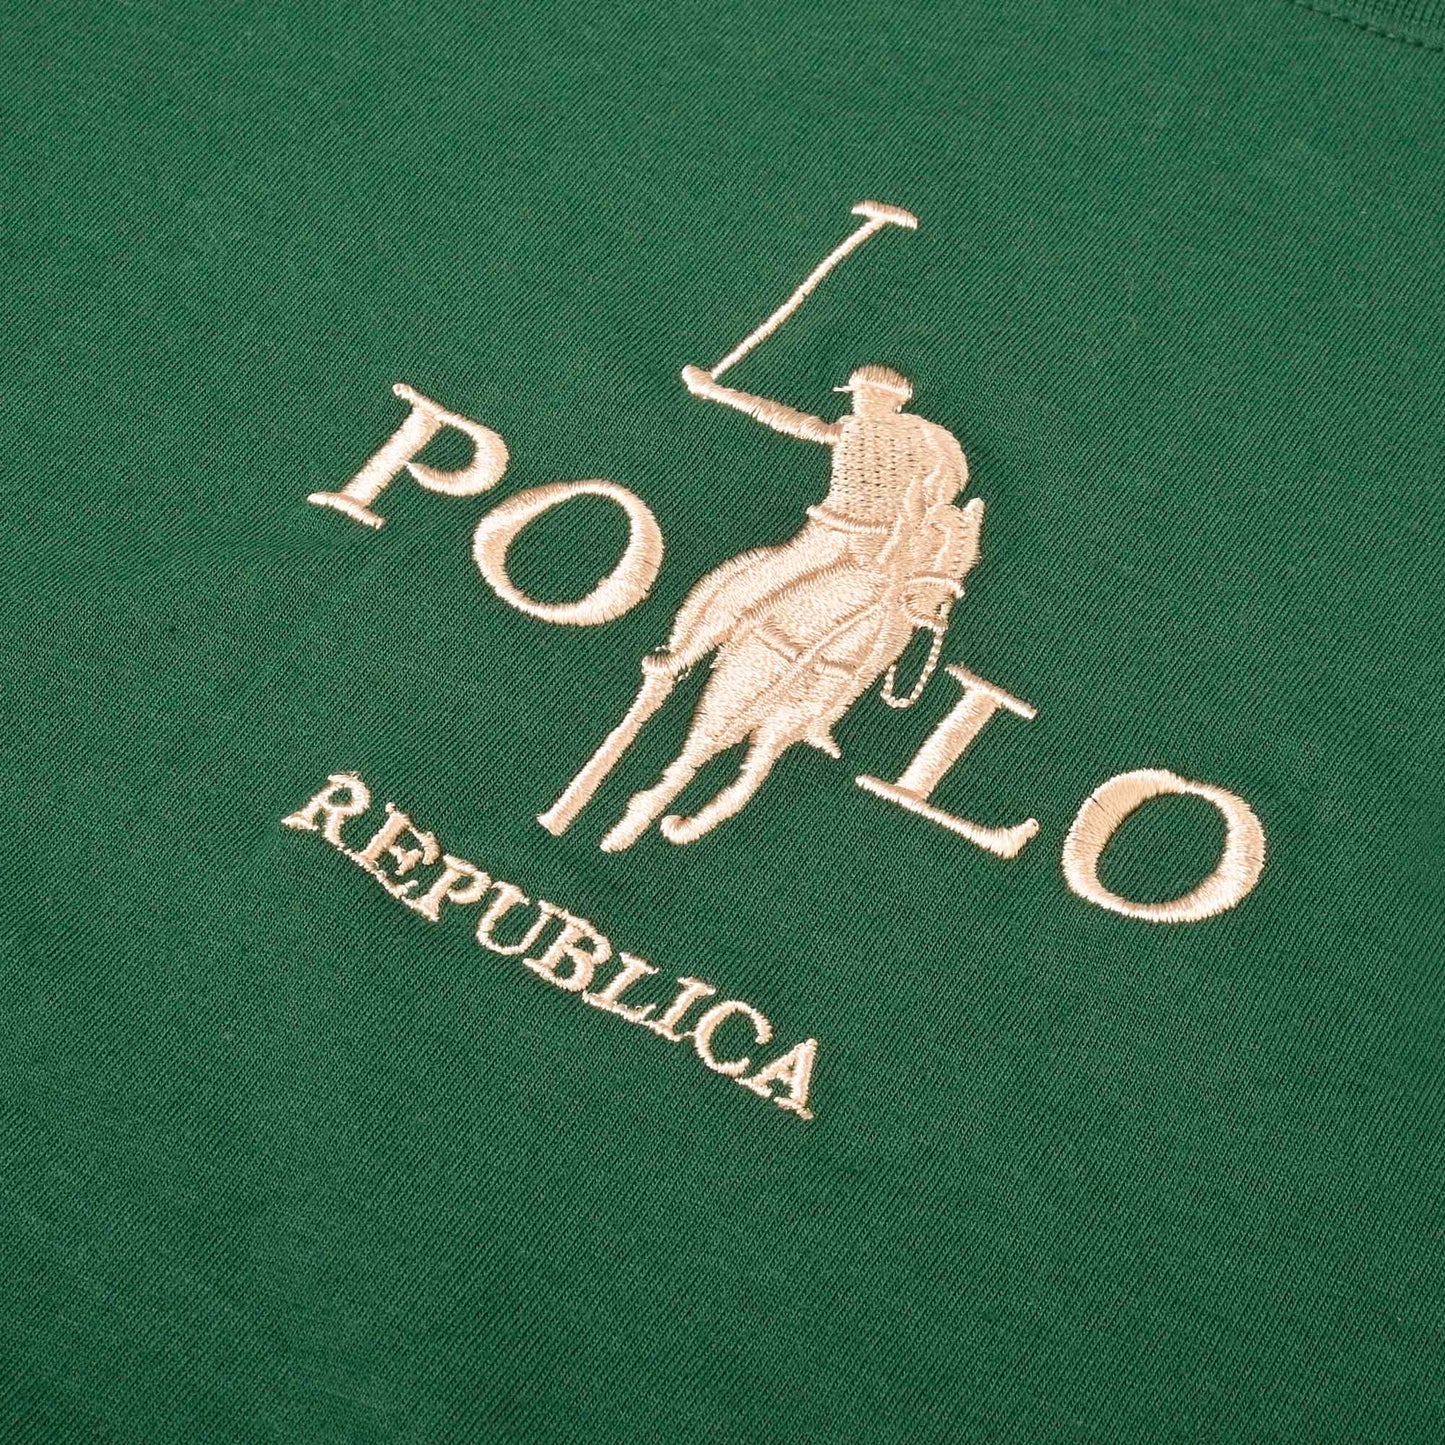 Polo Republica Men's Logo Embroidered Crew Neck Tee Shirt Men's Tee Shirt Polo Republica 